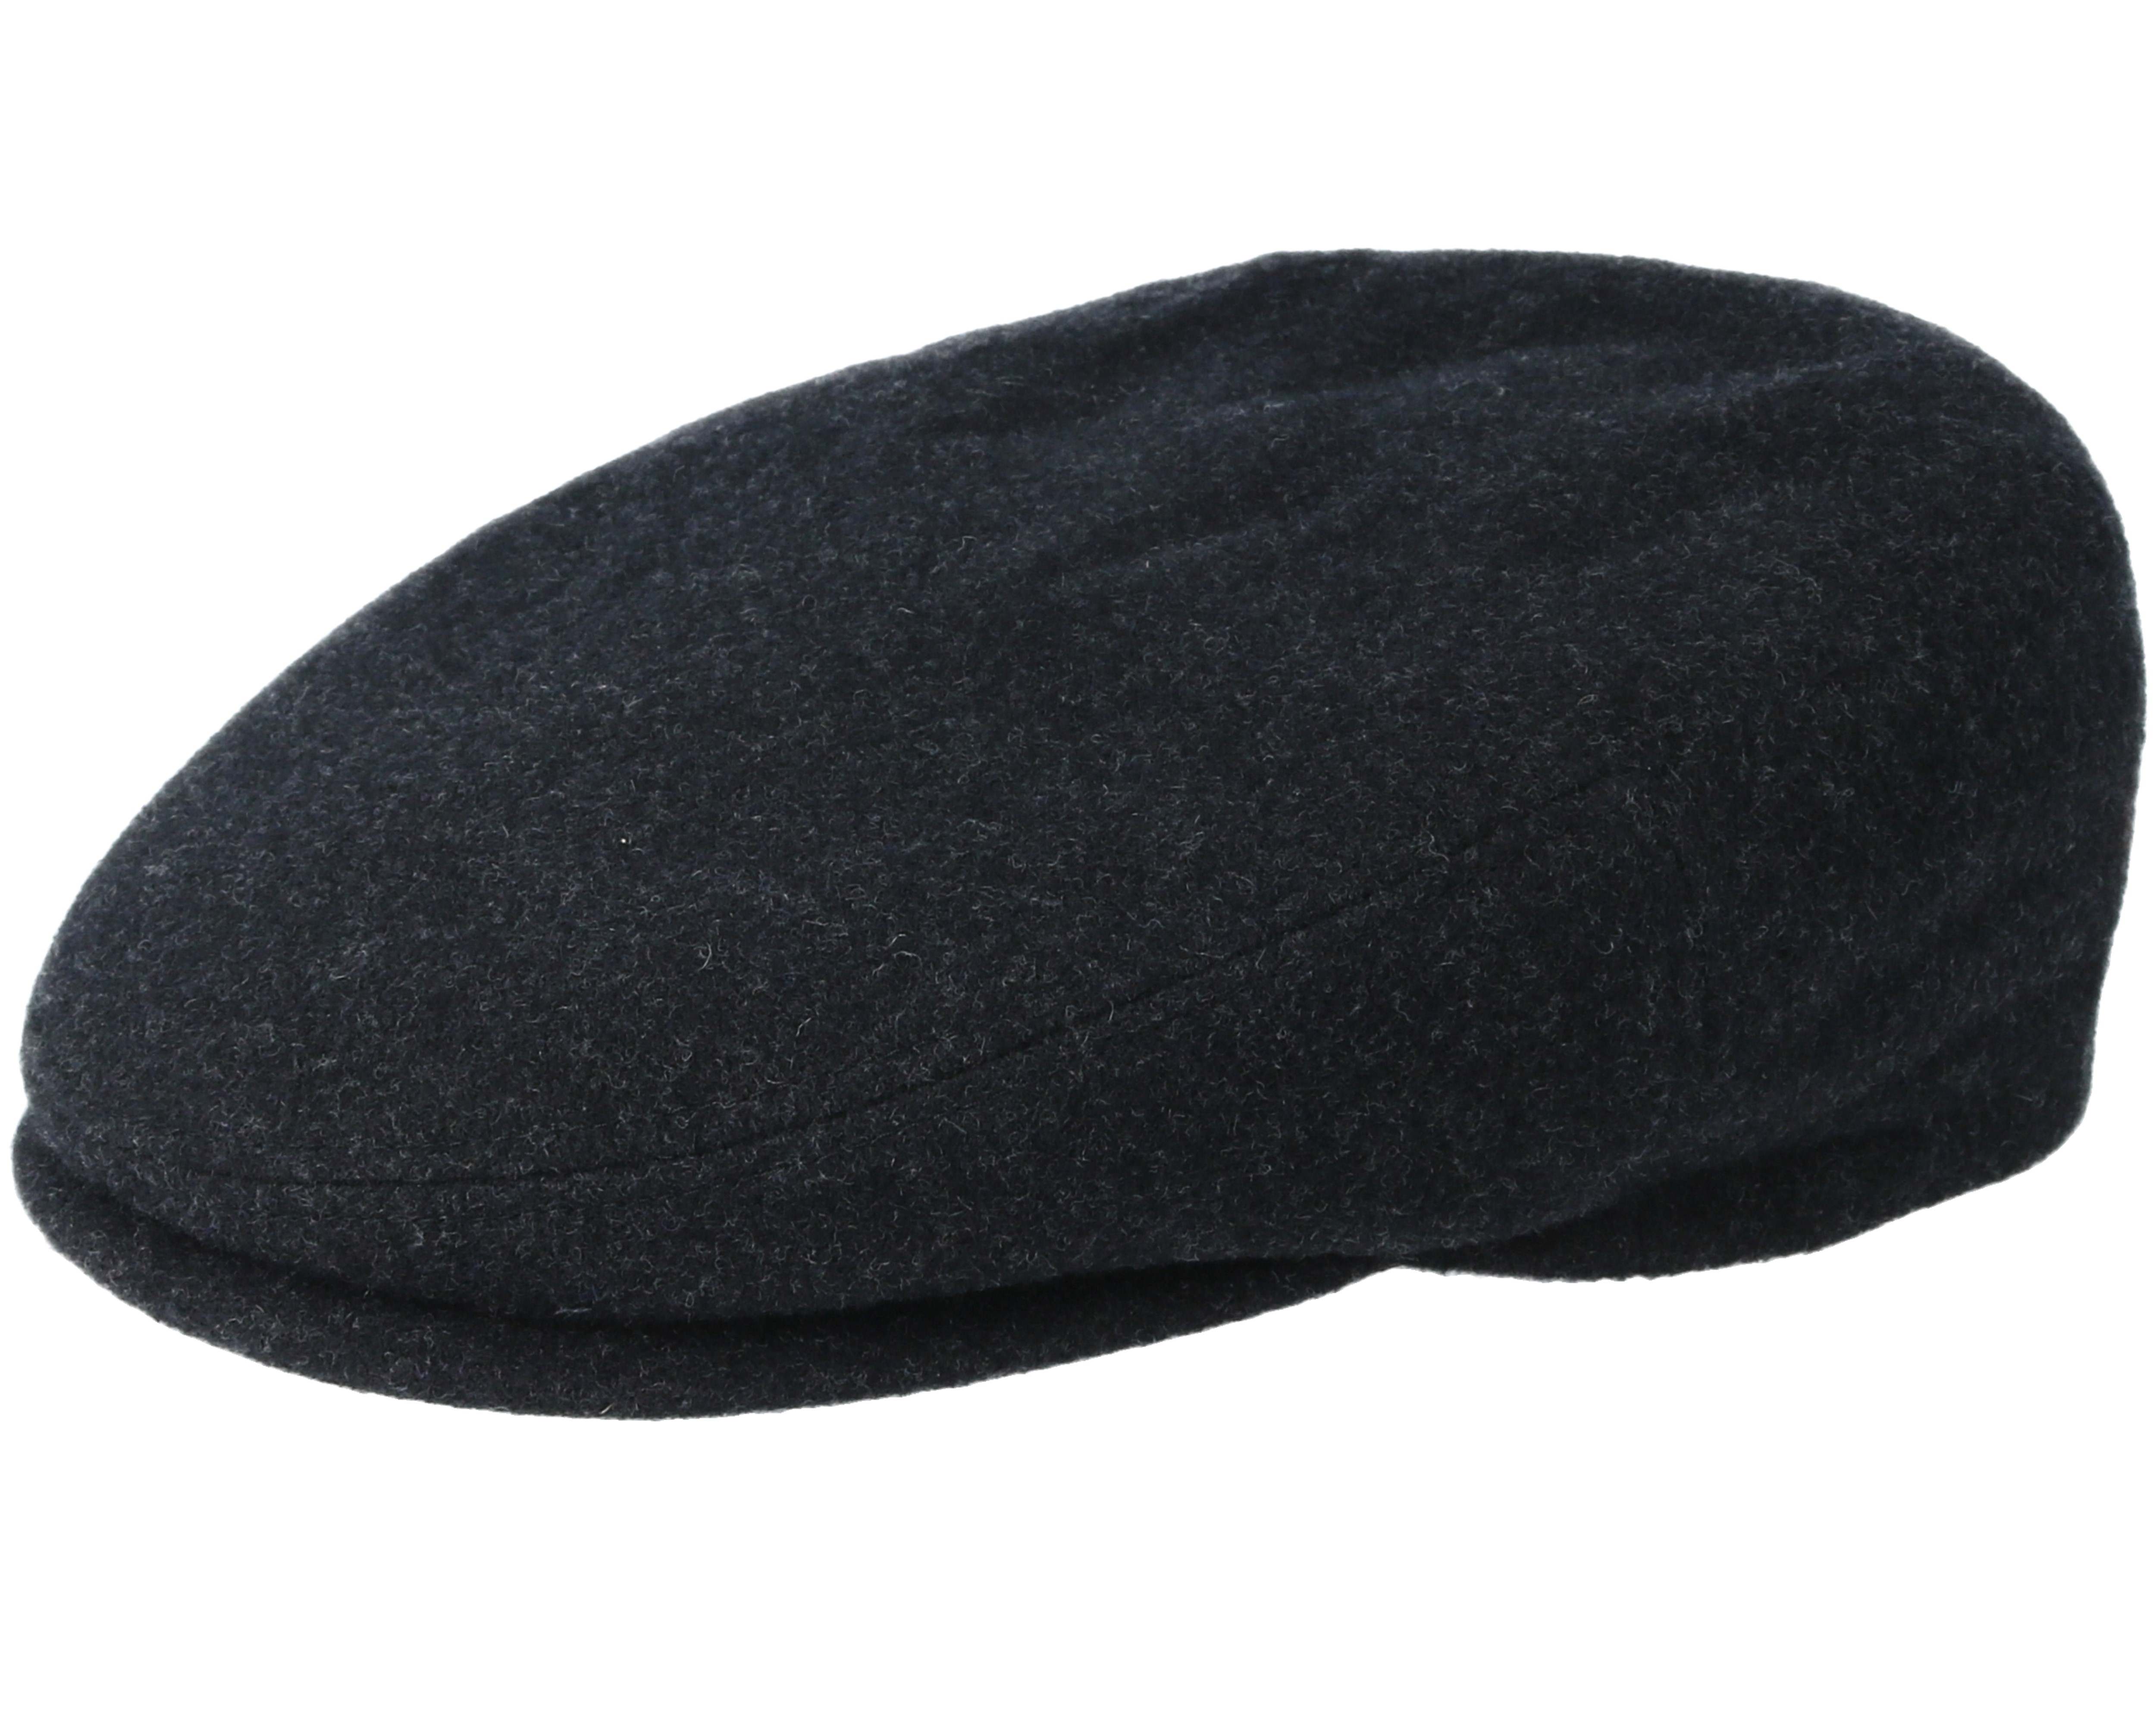 Kent Wool/Cashmere Black Flat Cap - Stetson caps - Hatstoreworld.com